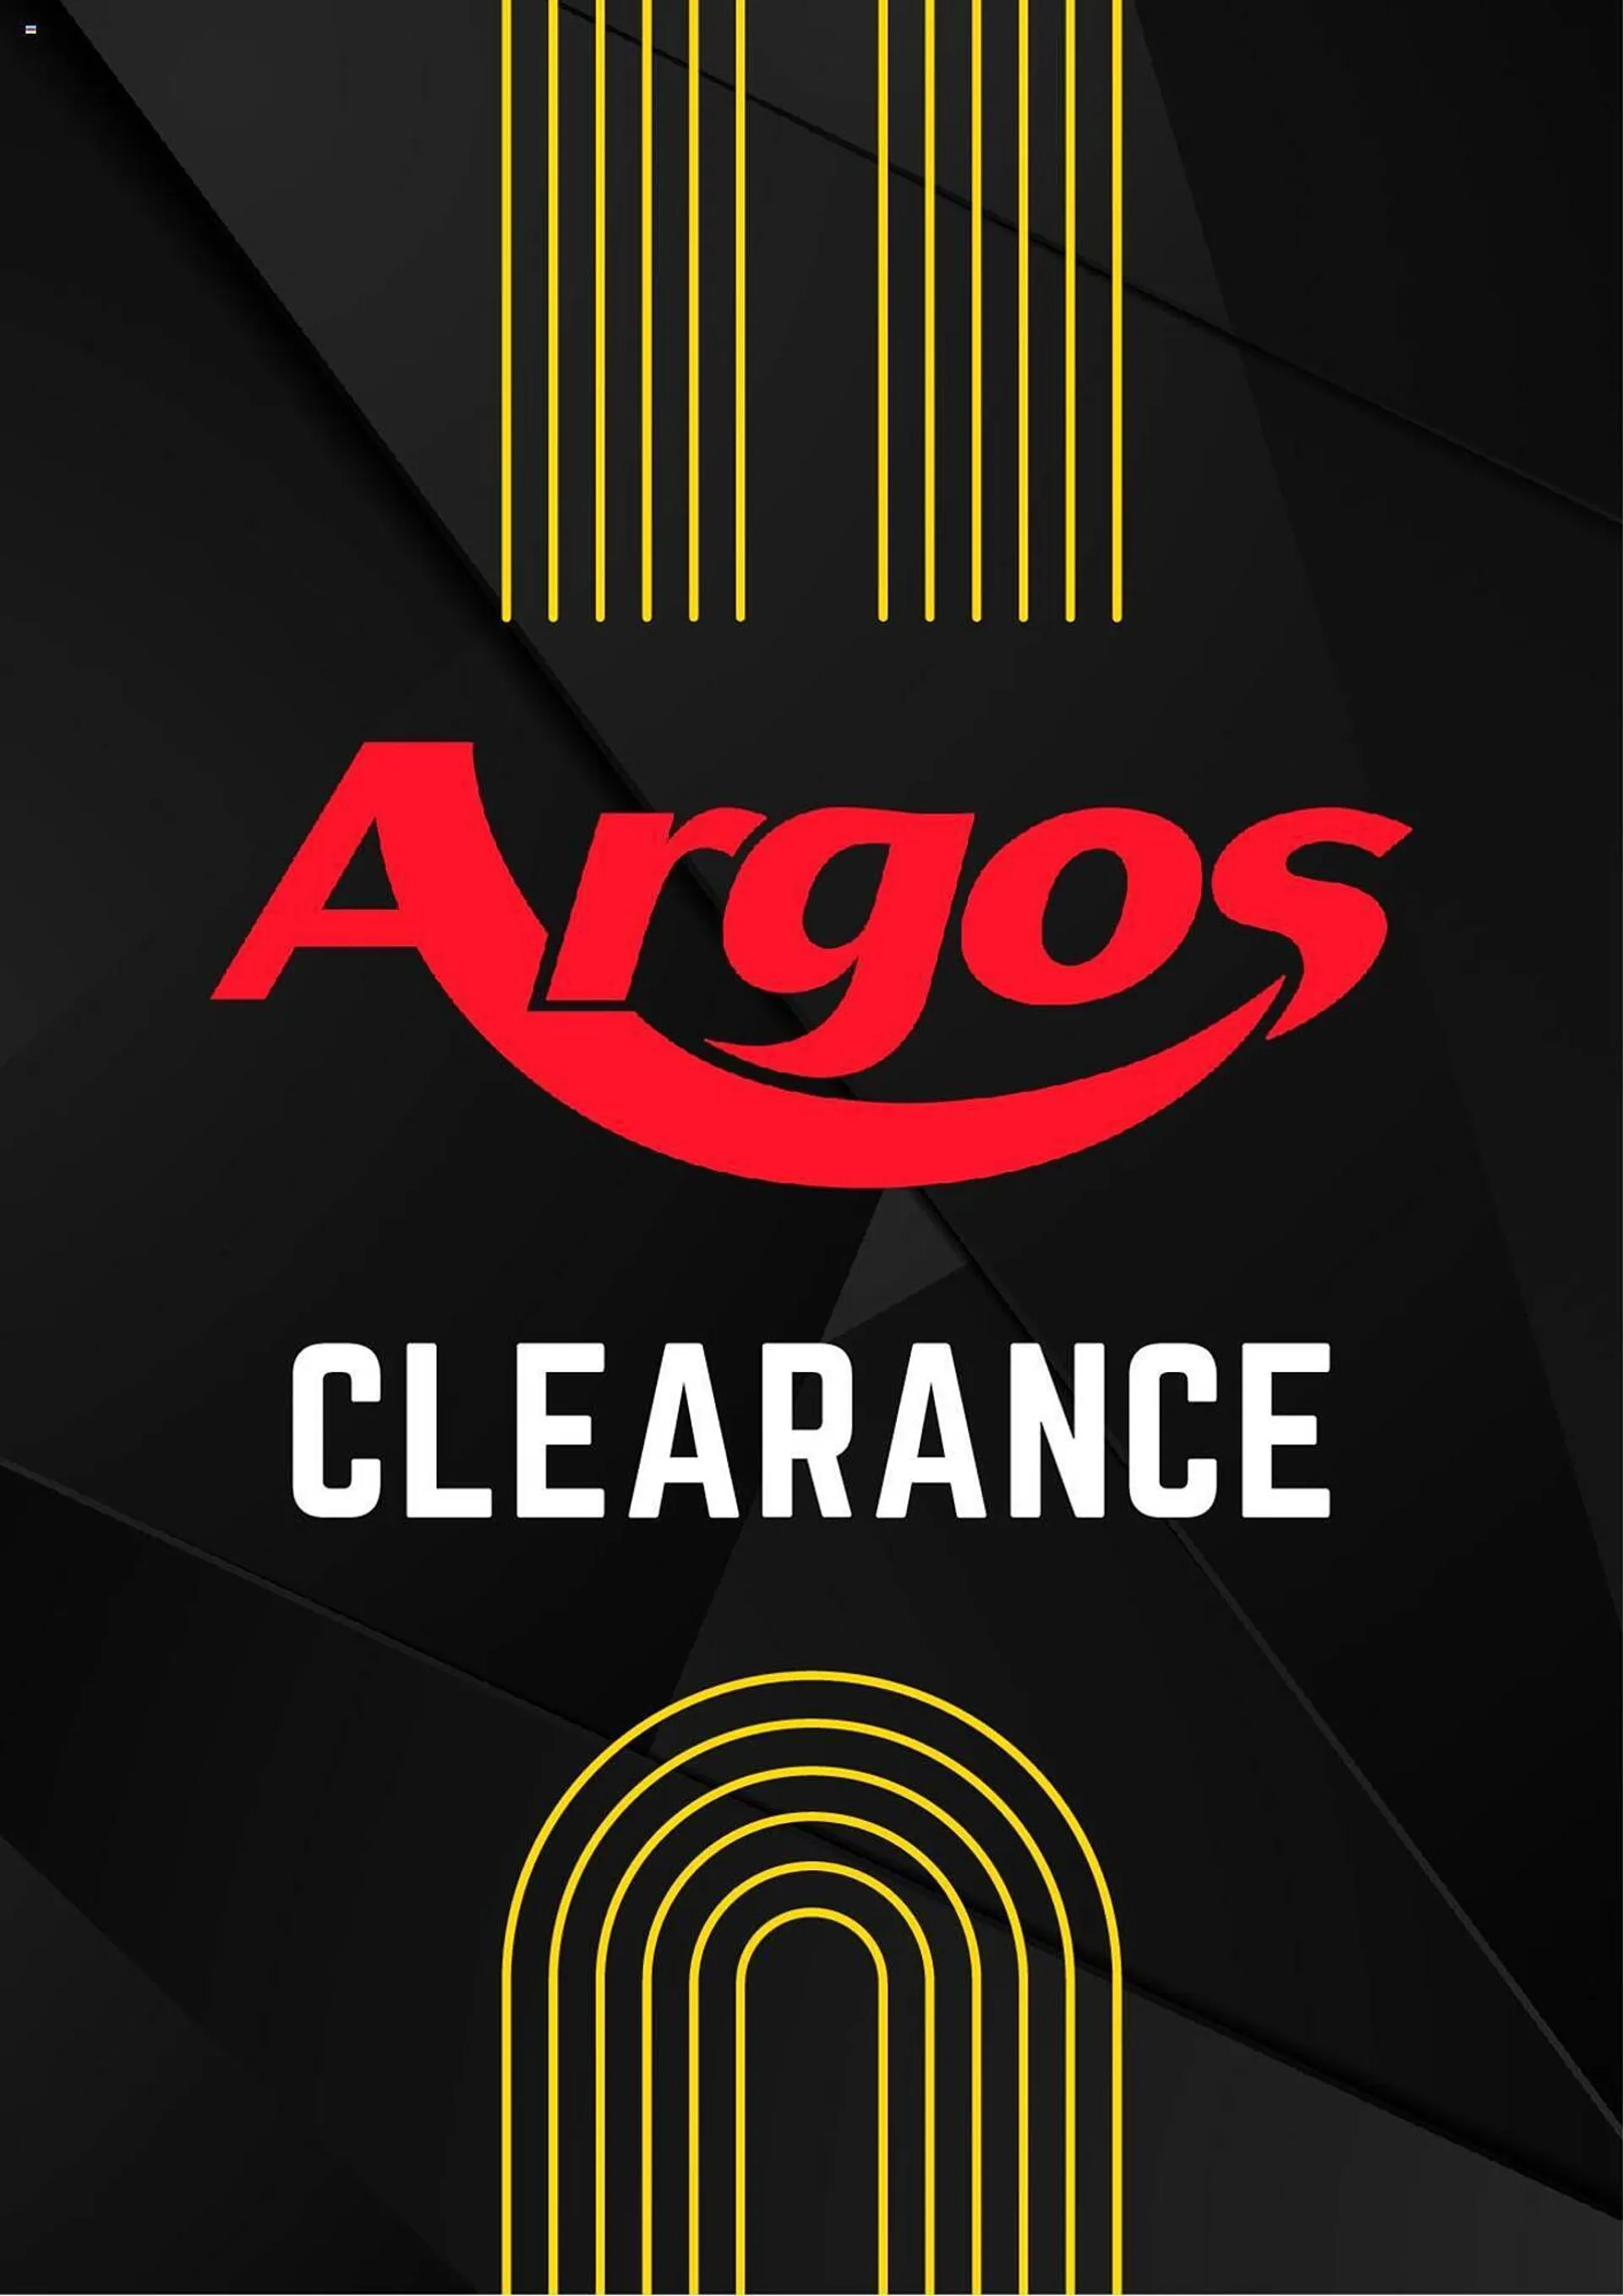 Argos leaflet - 1